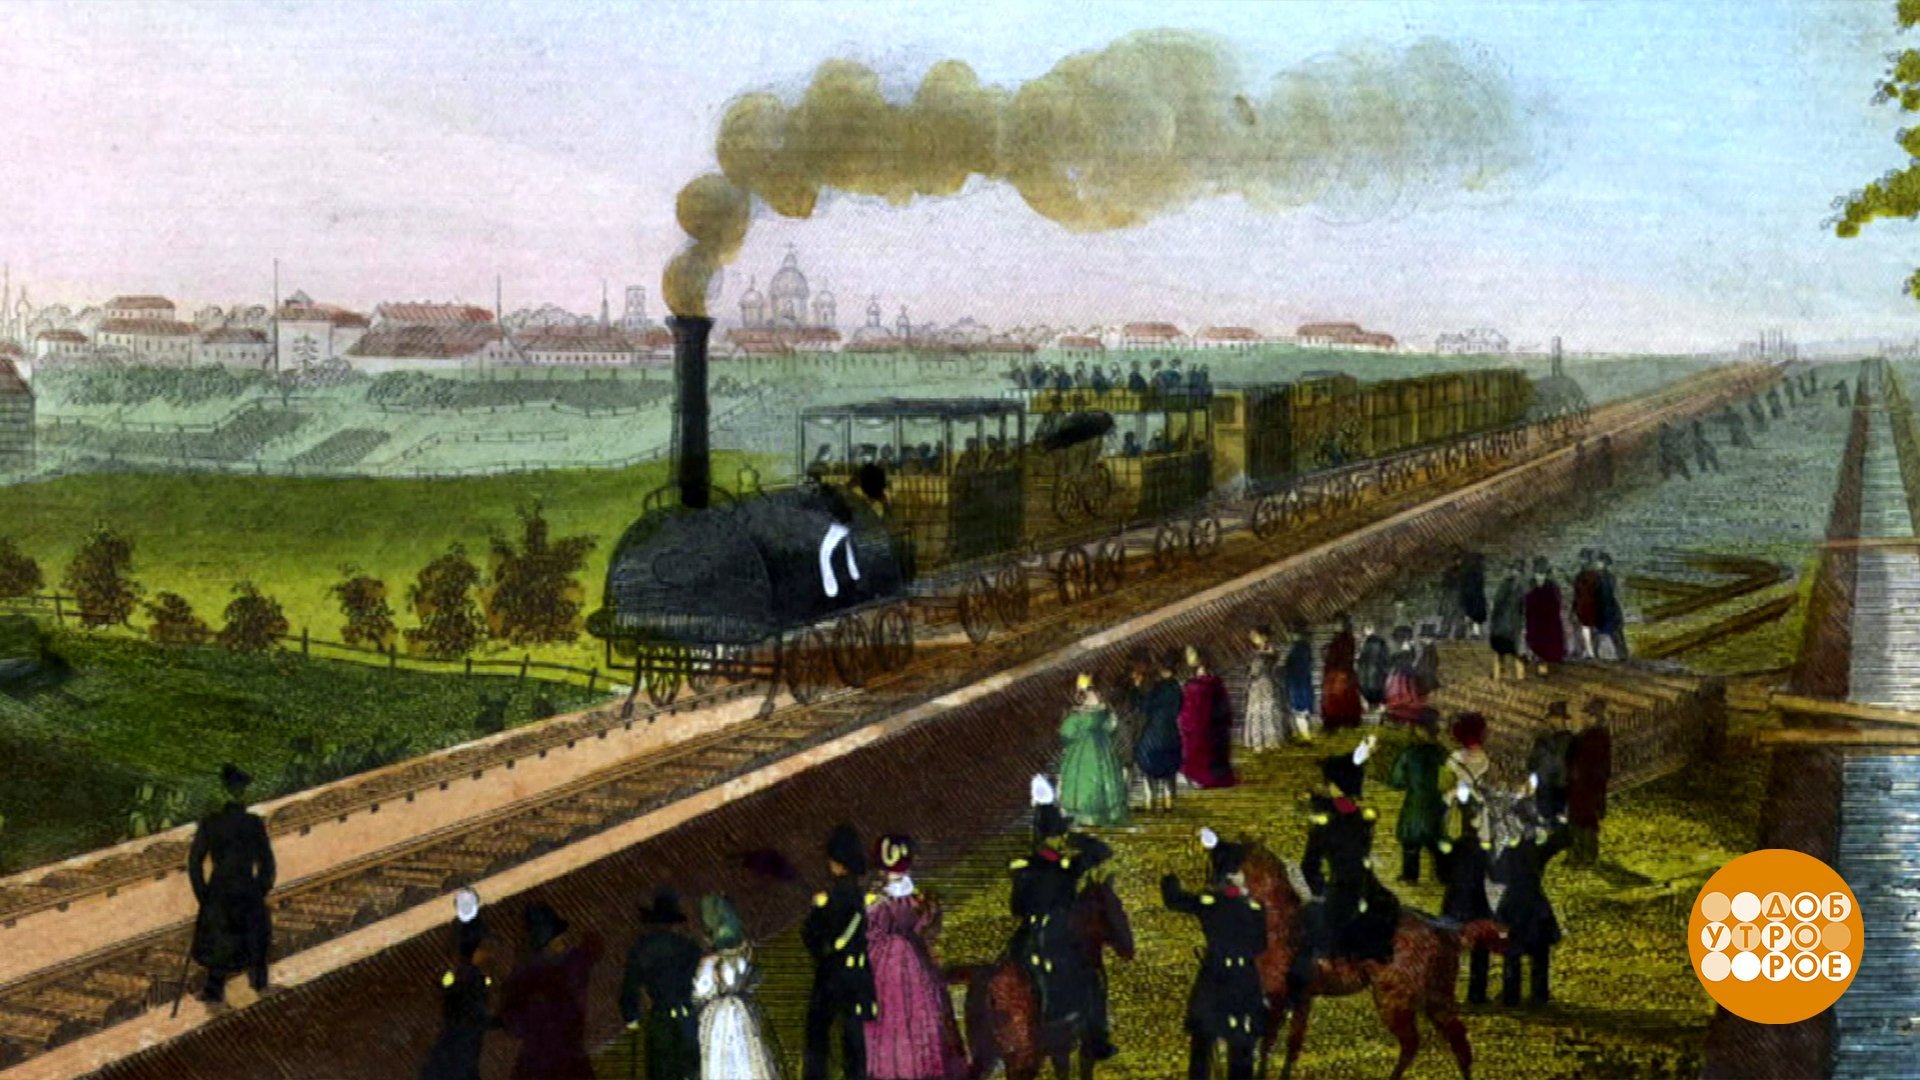 1837 г россия